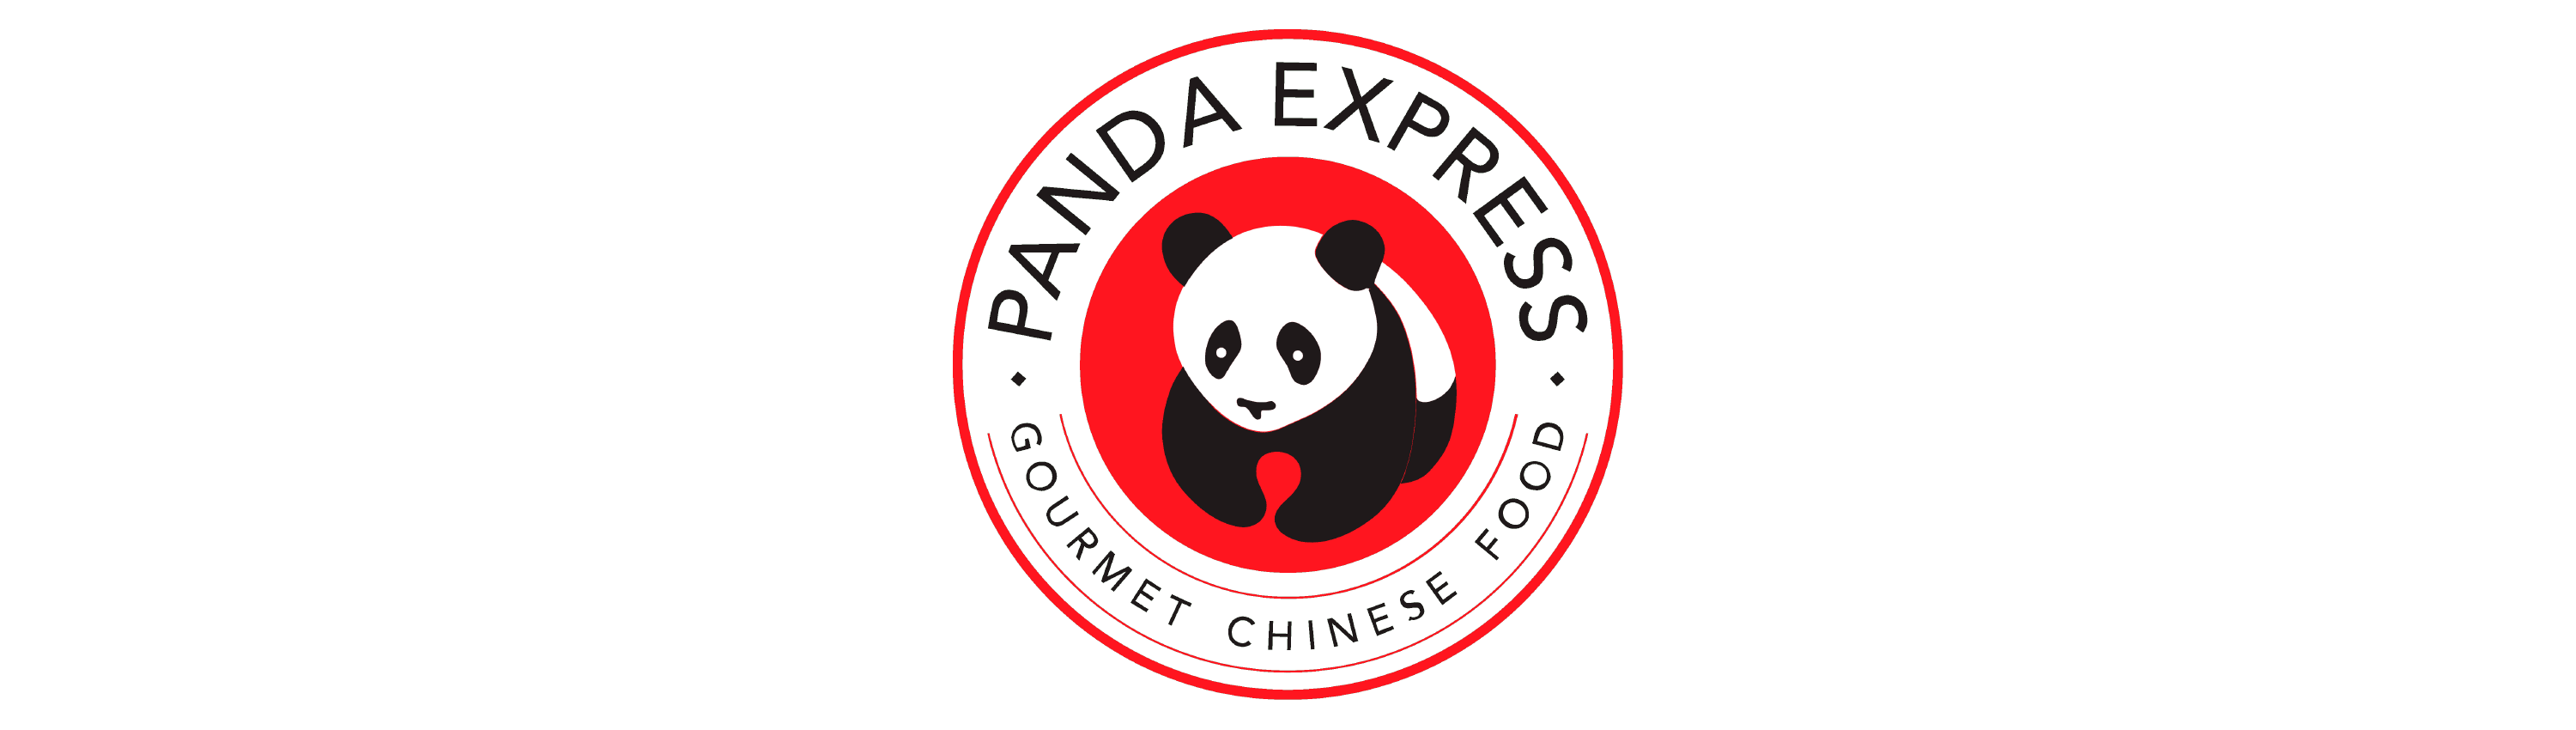 logos clientes_Panda Express